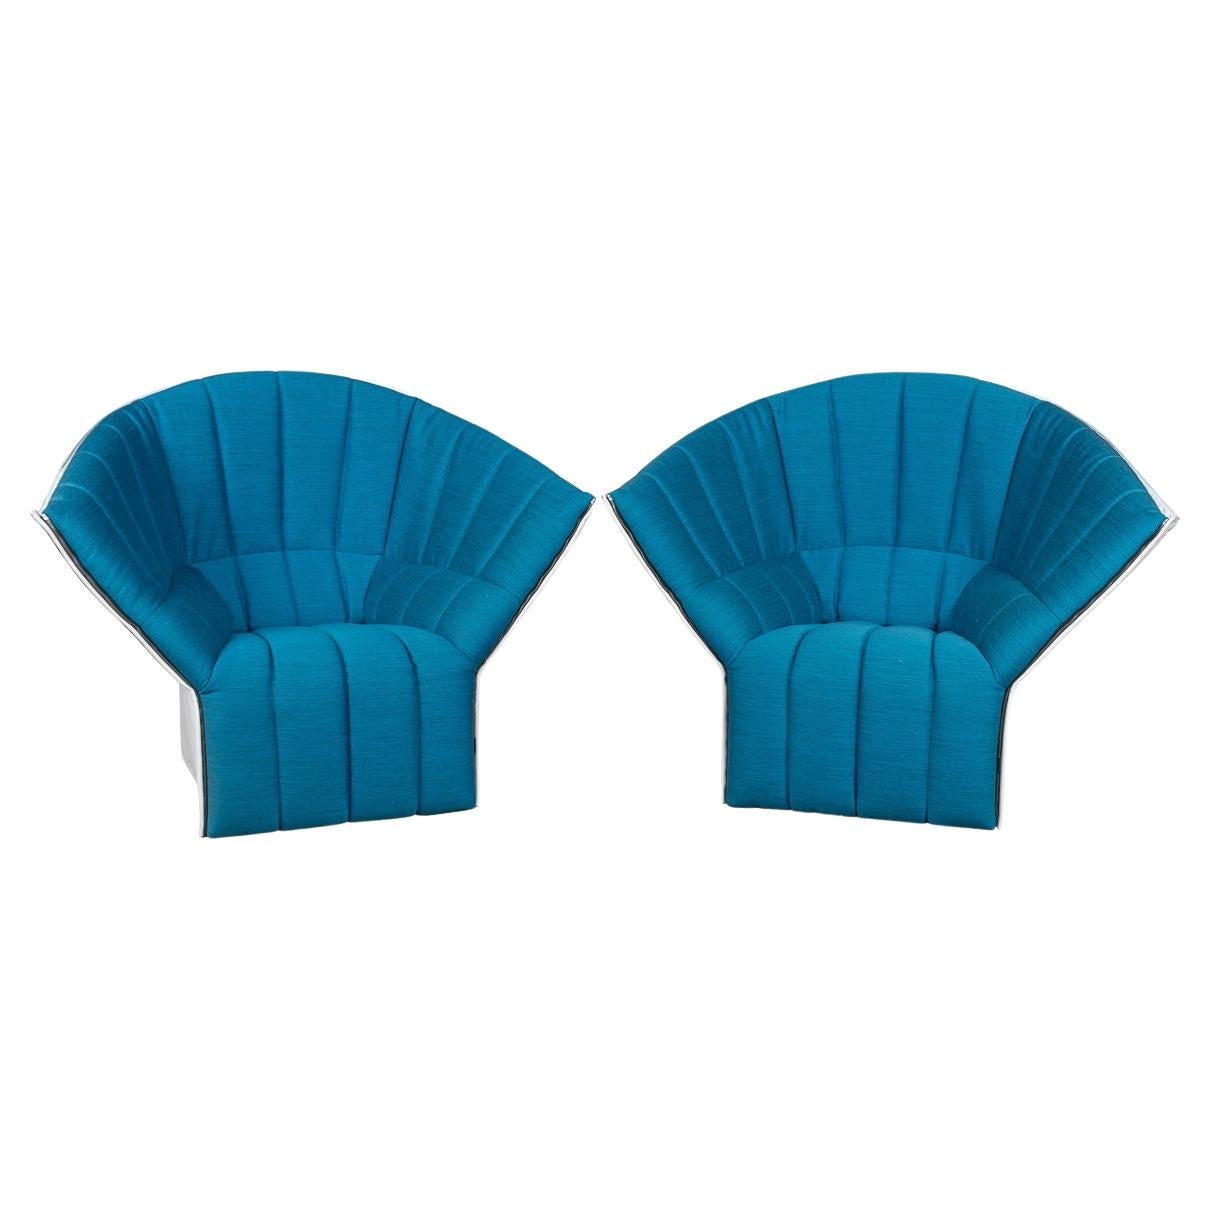 Pair Of 20thC "Moel" Ice Blue Love Seats By Inga Sampe' For Ligne Roset, France For Sale